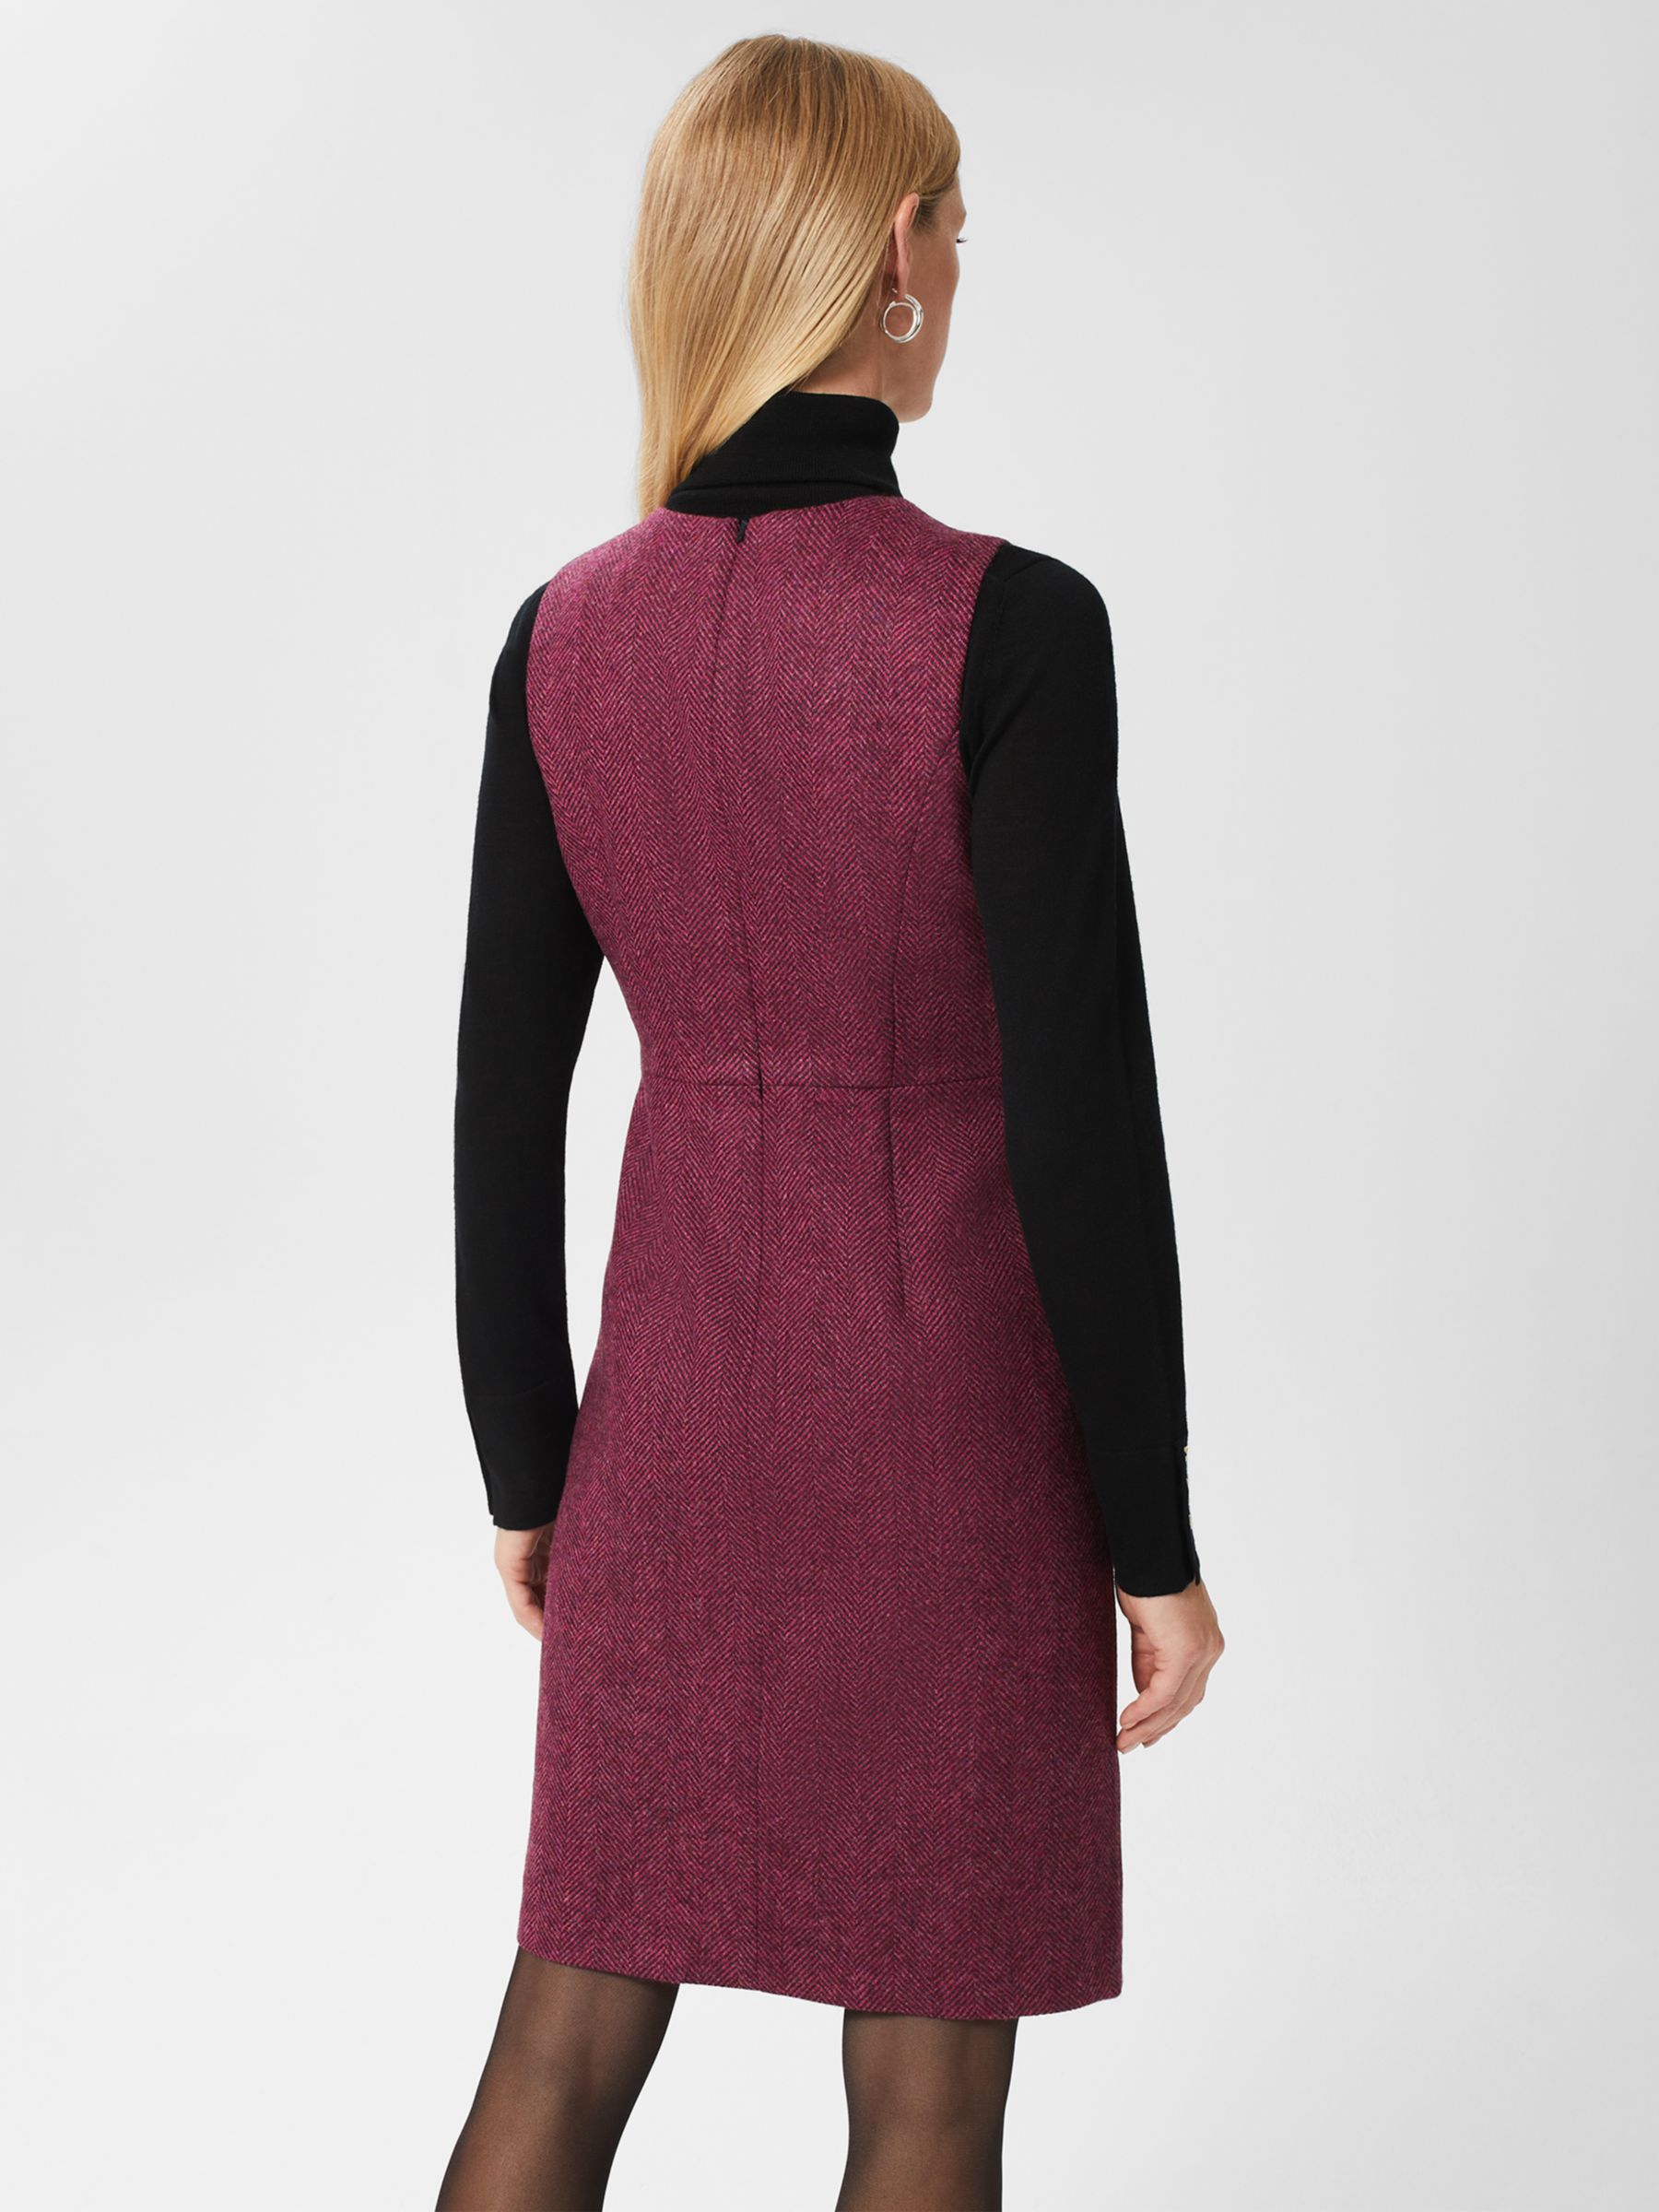 Hobbs Lucia Wool A-Line Dress, Purple at John Lewis & Partners